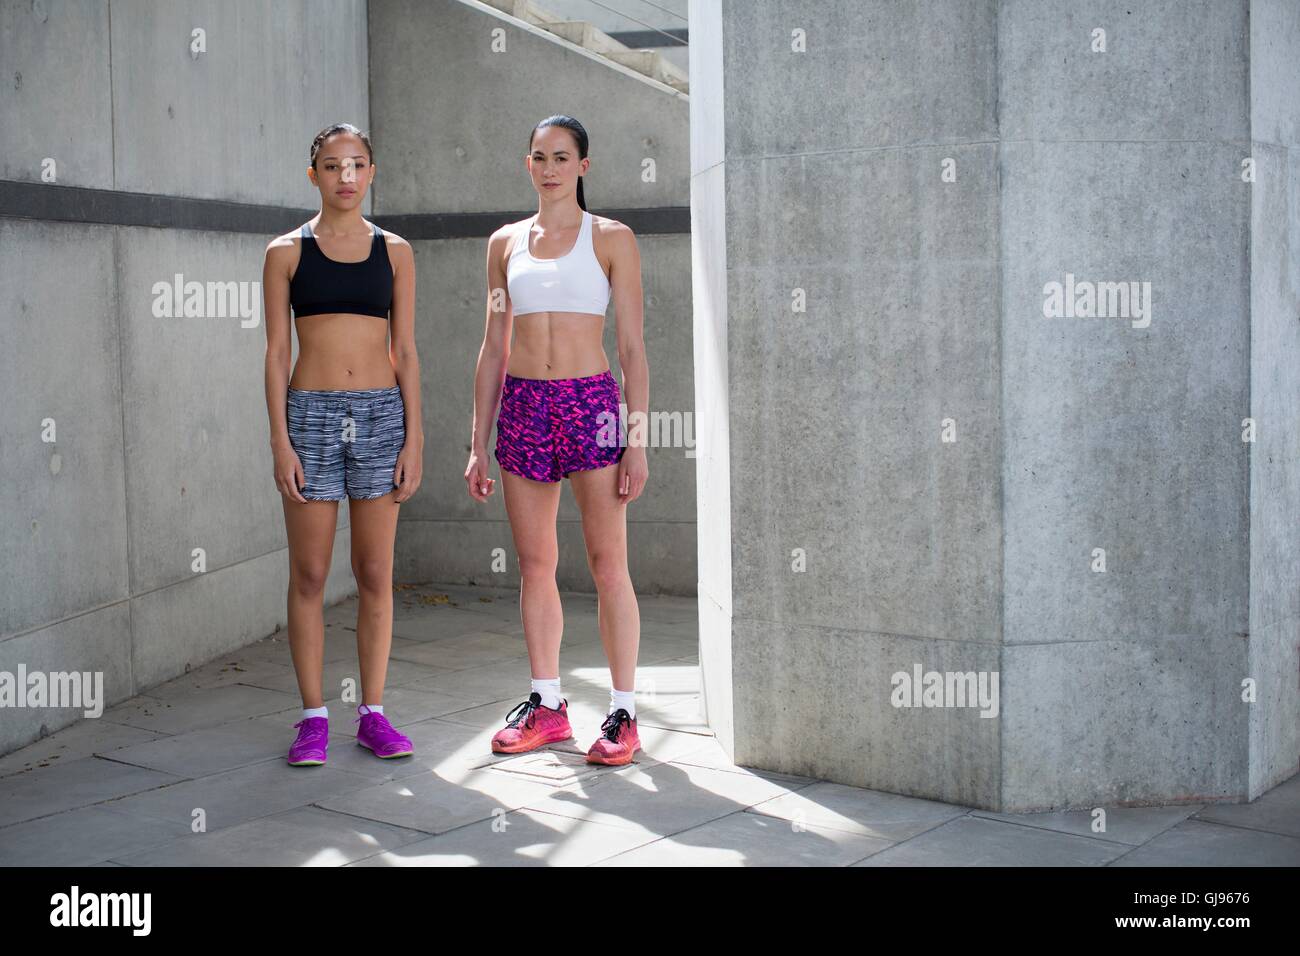 MODEL RELEASED. Two young women in sports wear. Stock Photo